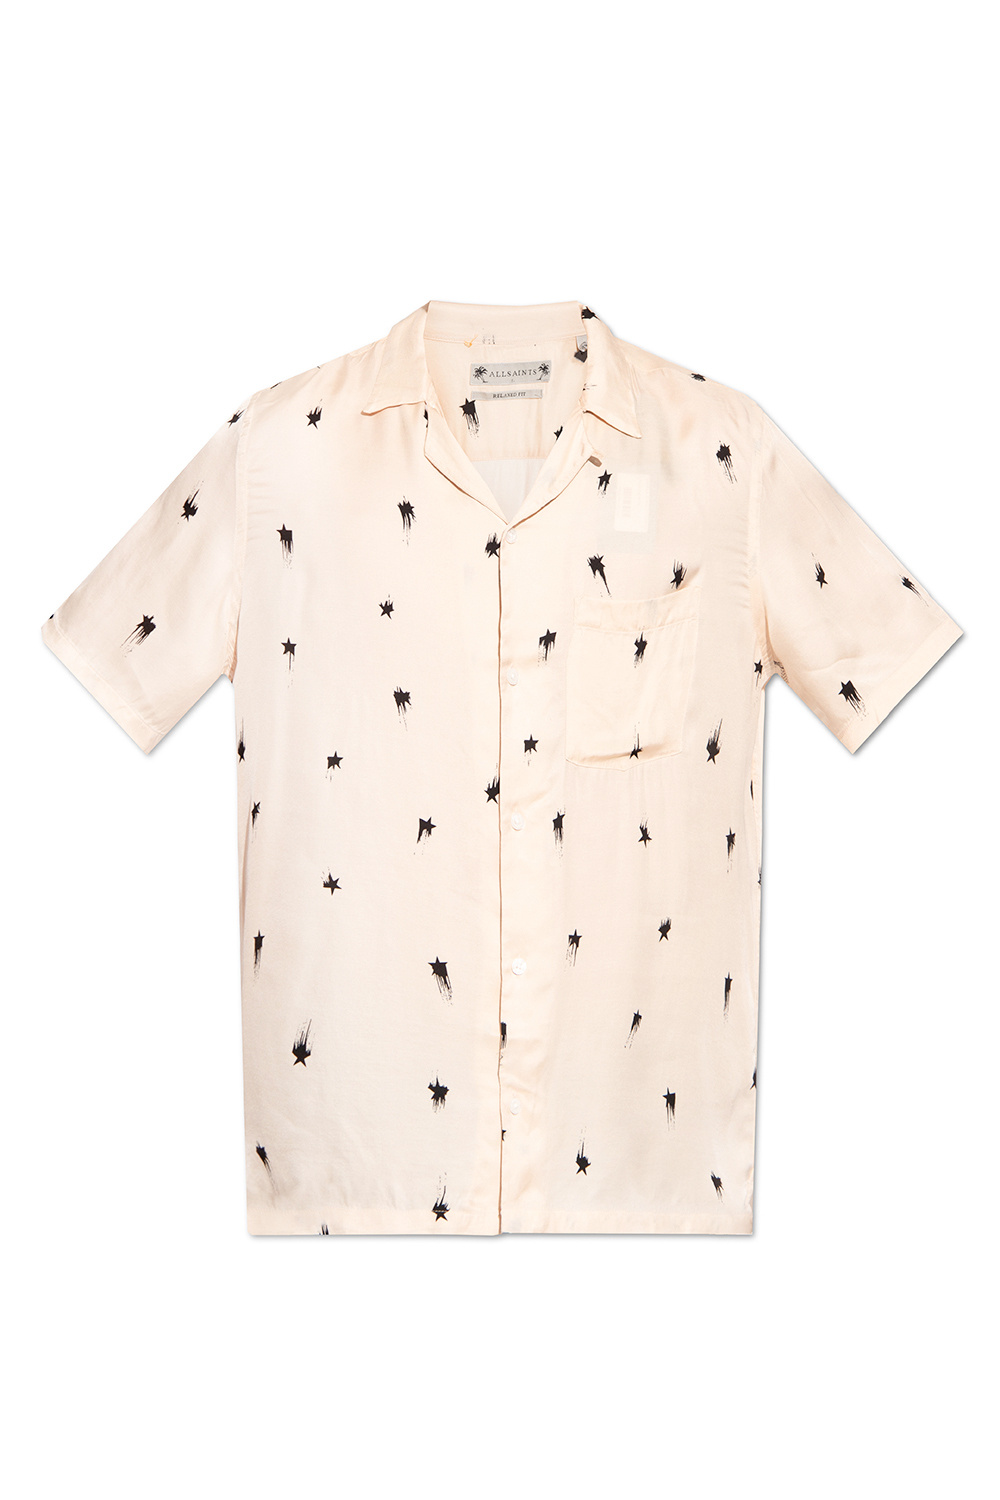 AllSaints 'Starburn' shirt, Men's Clothing